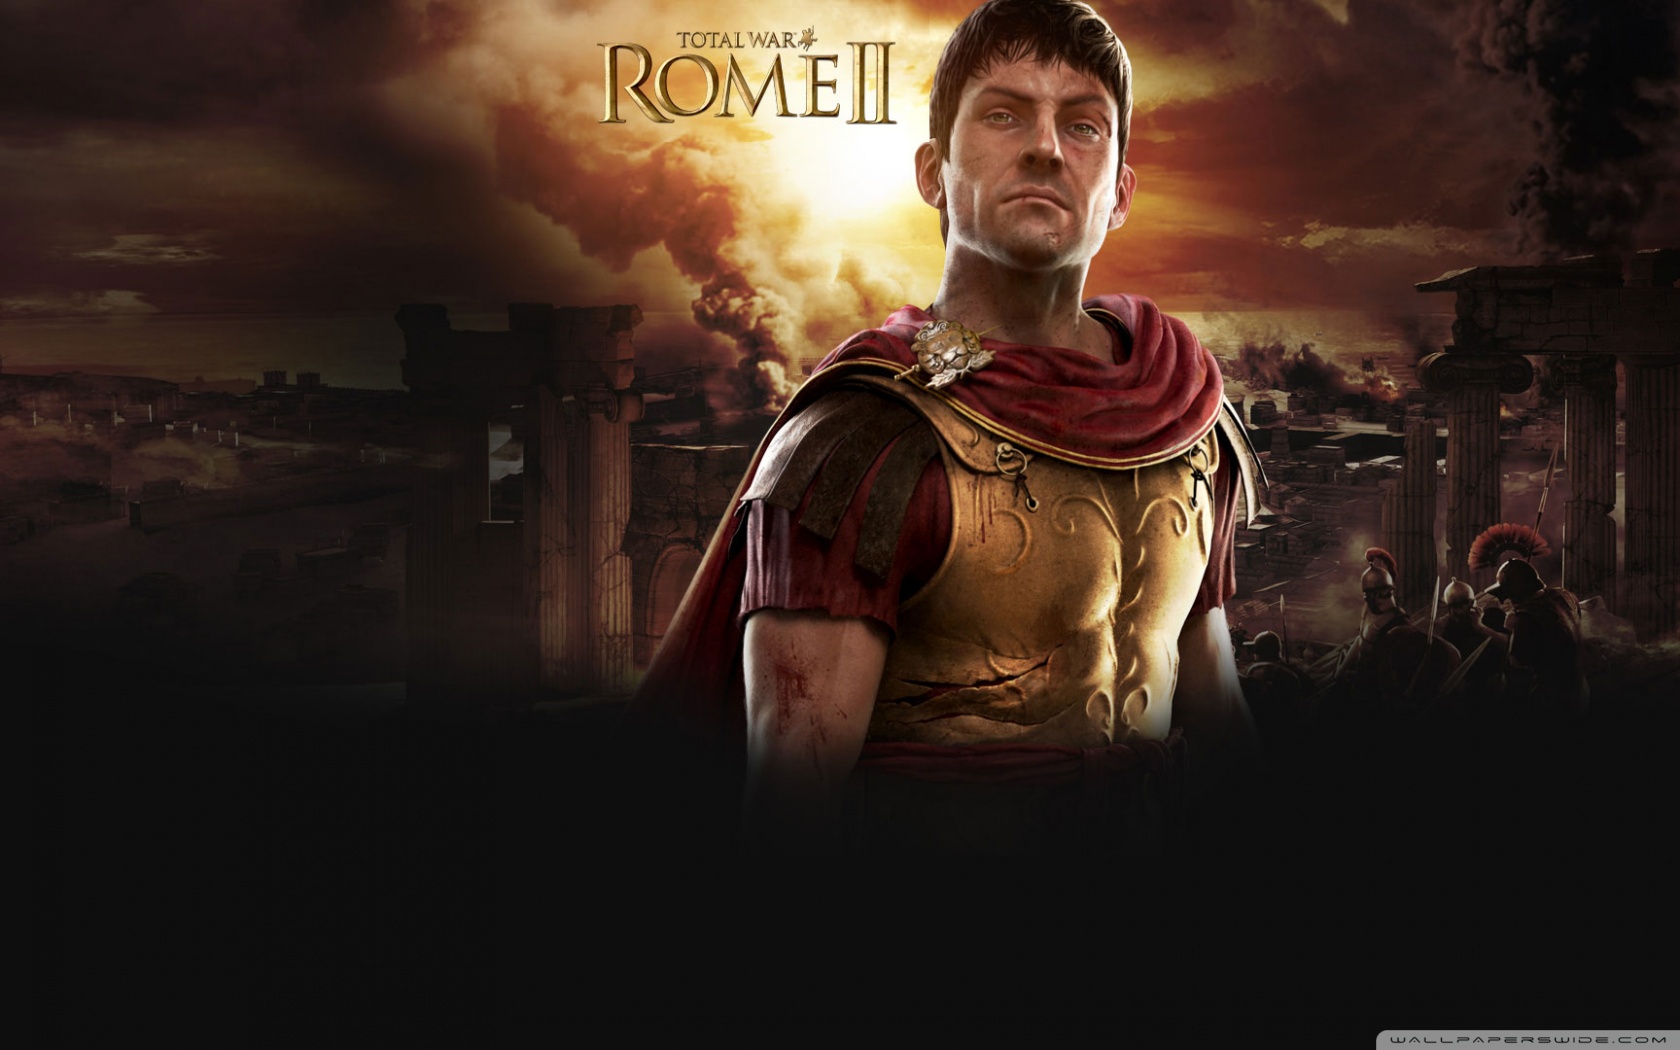 Wallpaper ID 482142  Video Game Total War Rome II Phone Wallpaper   720x1280 free download